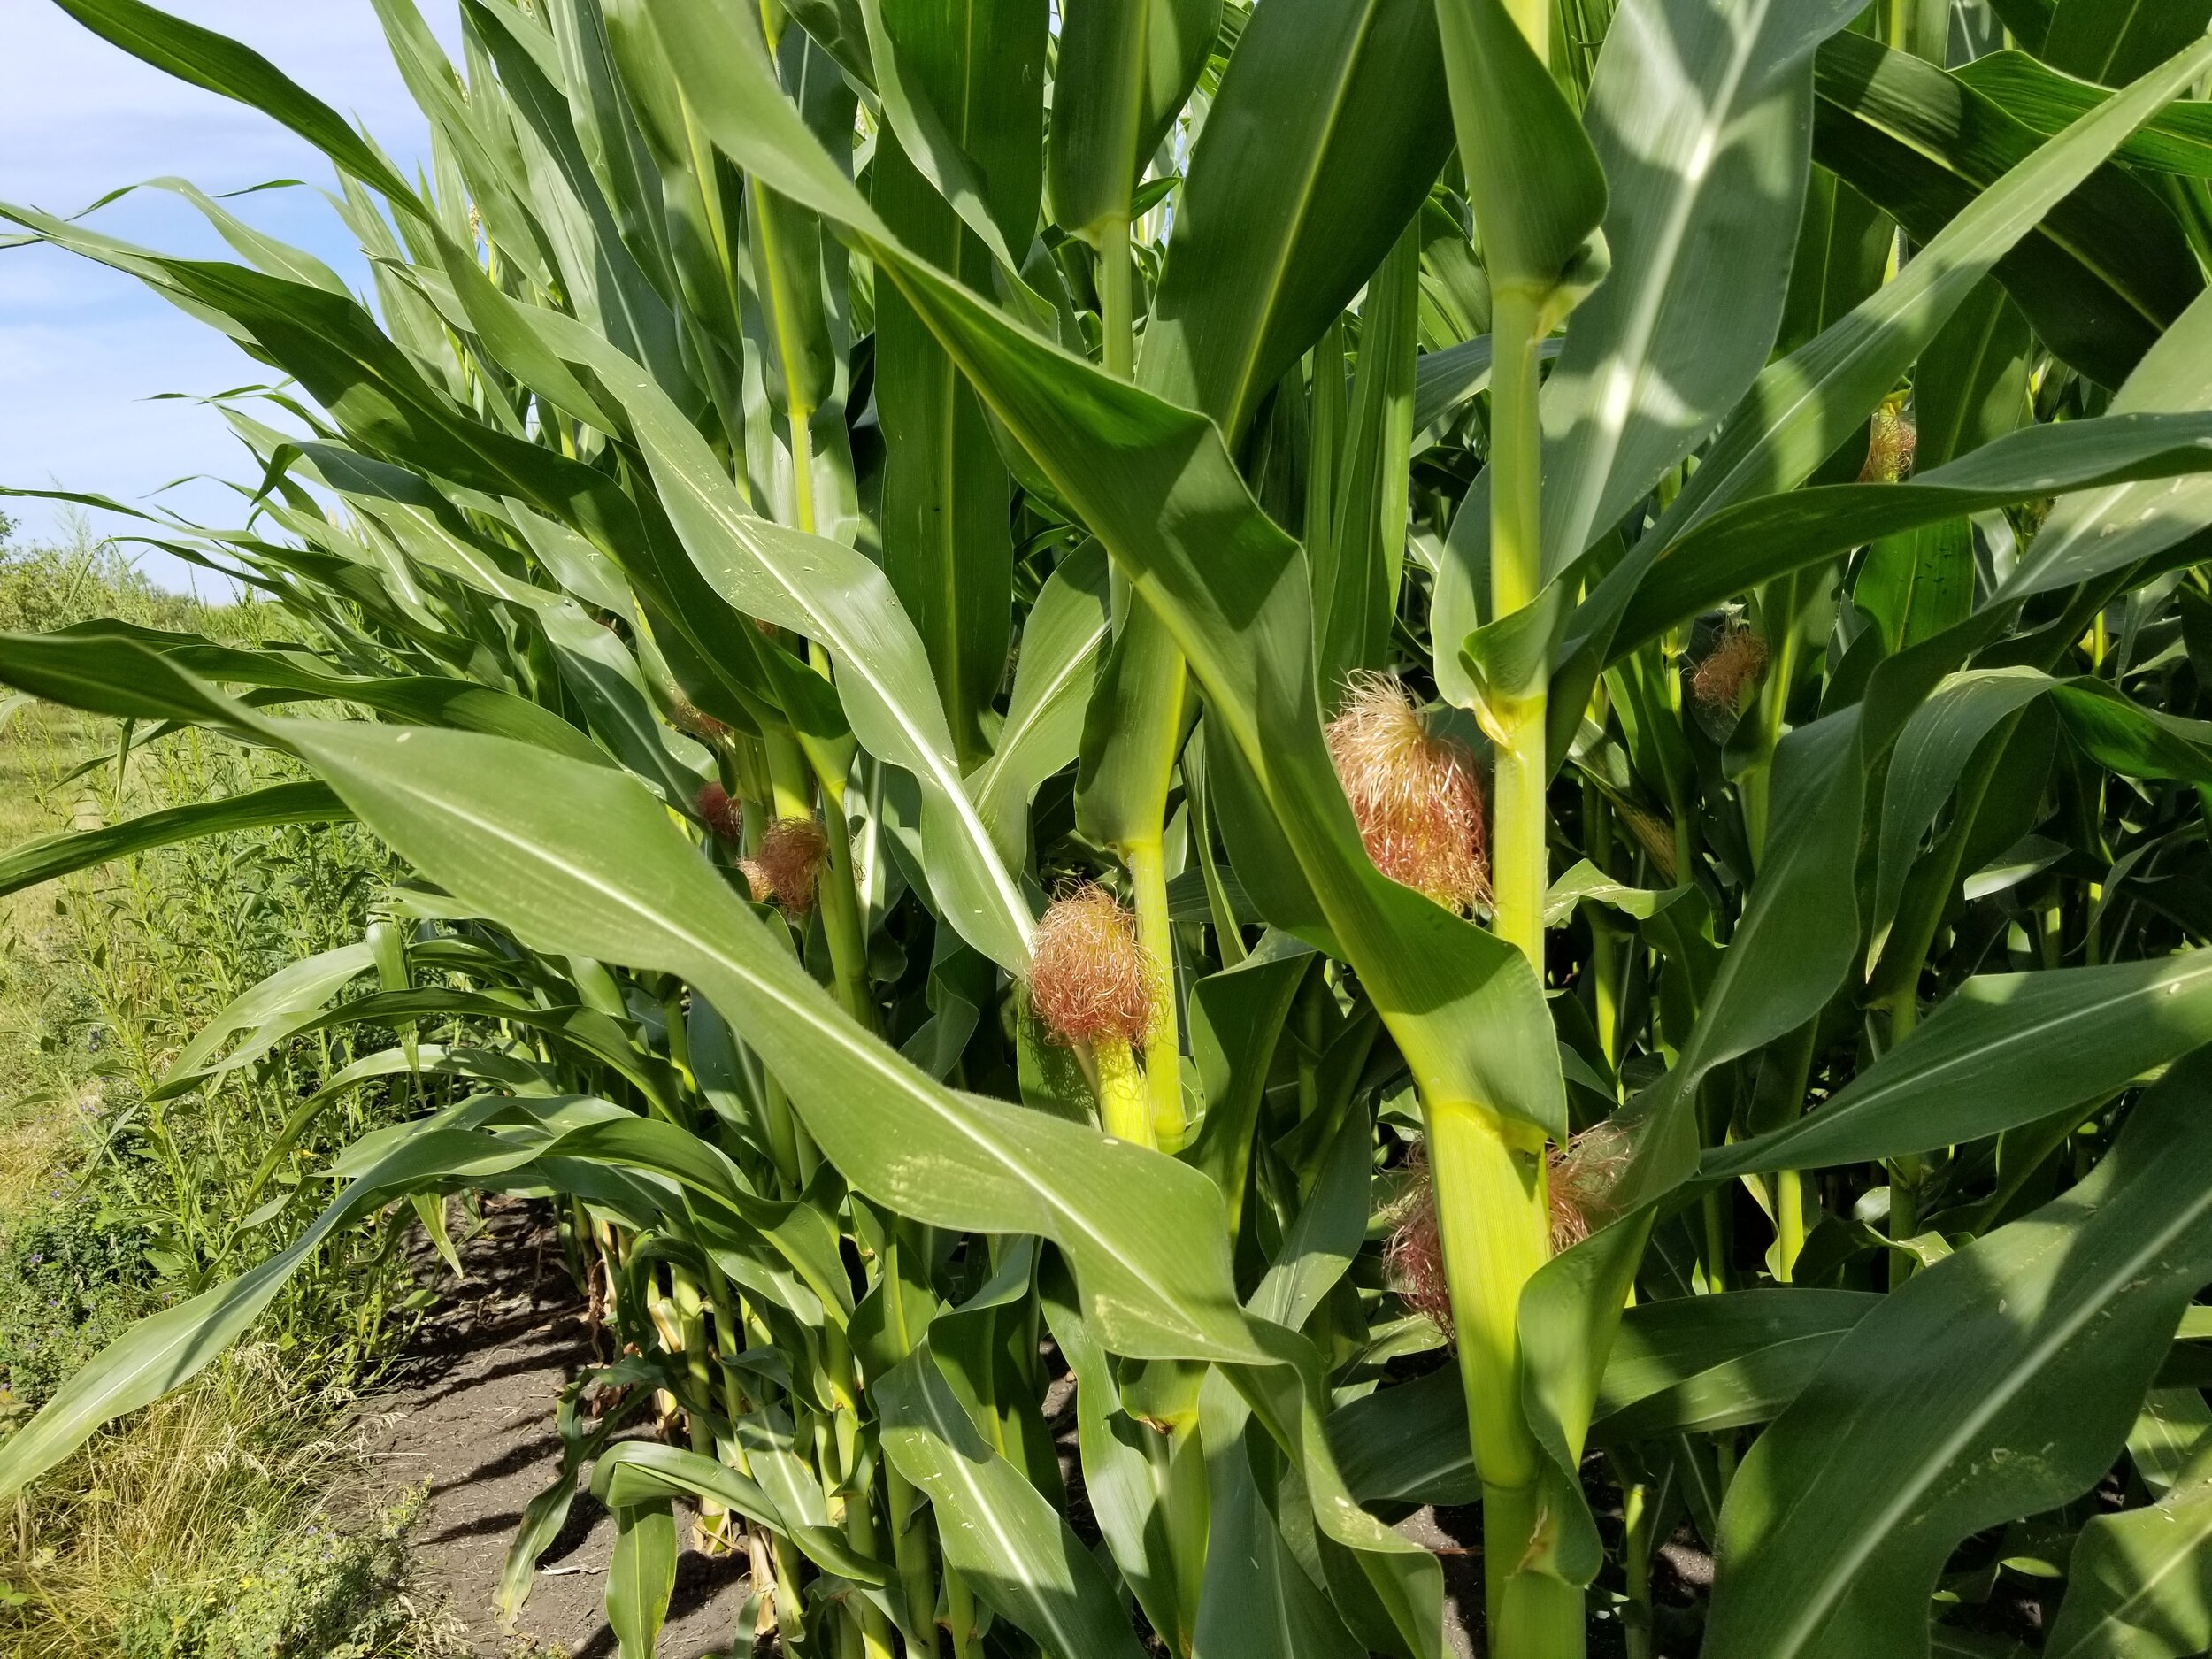 07.31.20 Organic corn tassling out